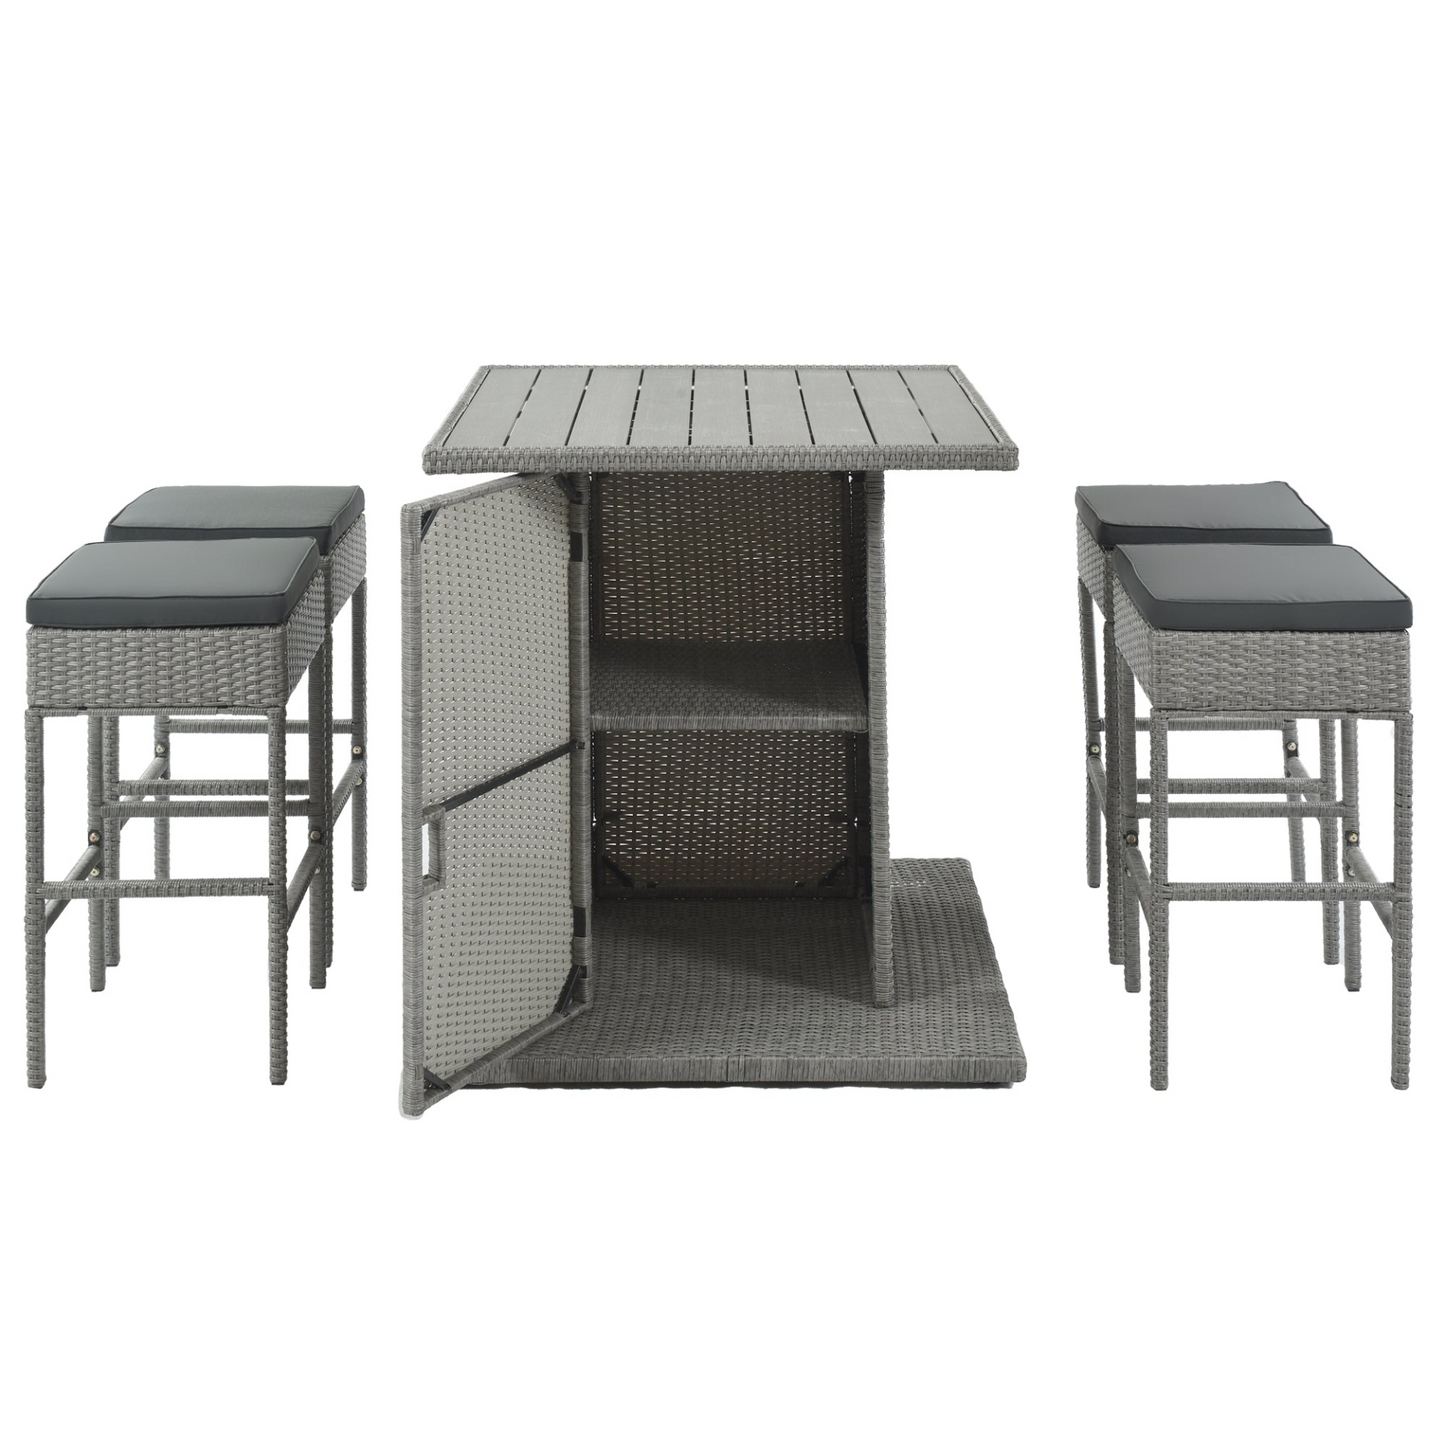 TOPMAX 5-Piece Rattan Dining Table Set with Storage Shelf (Gray)